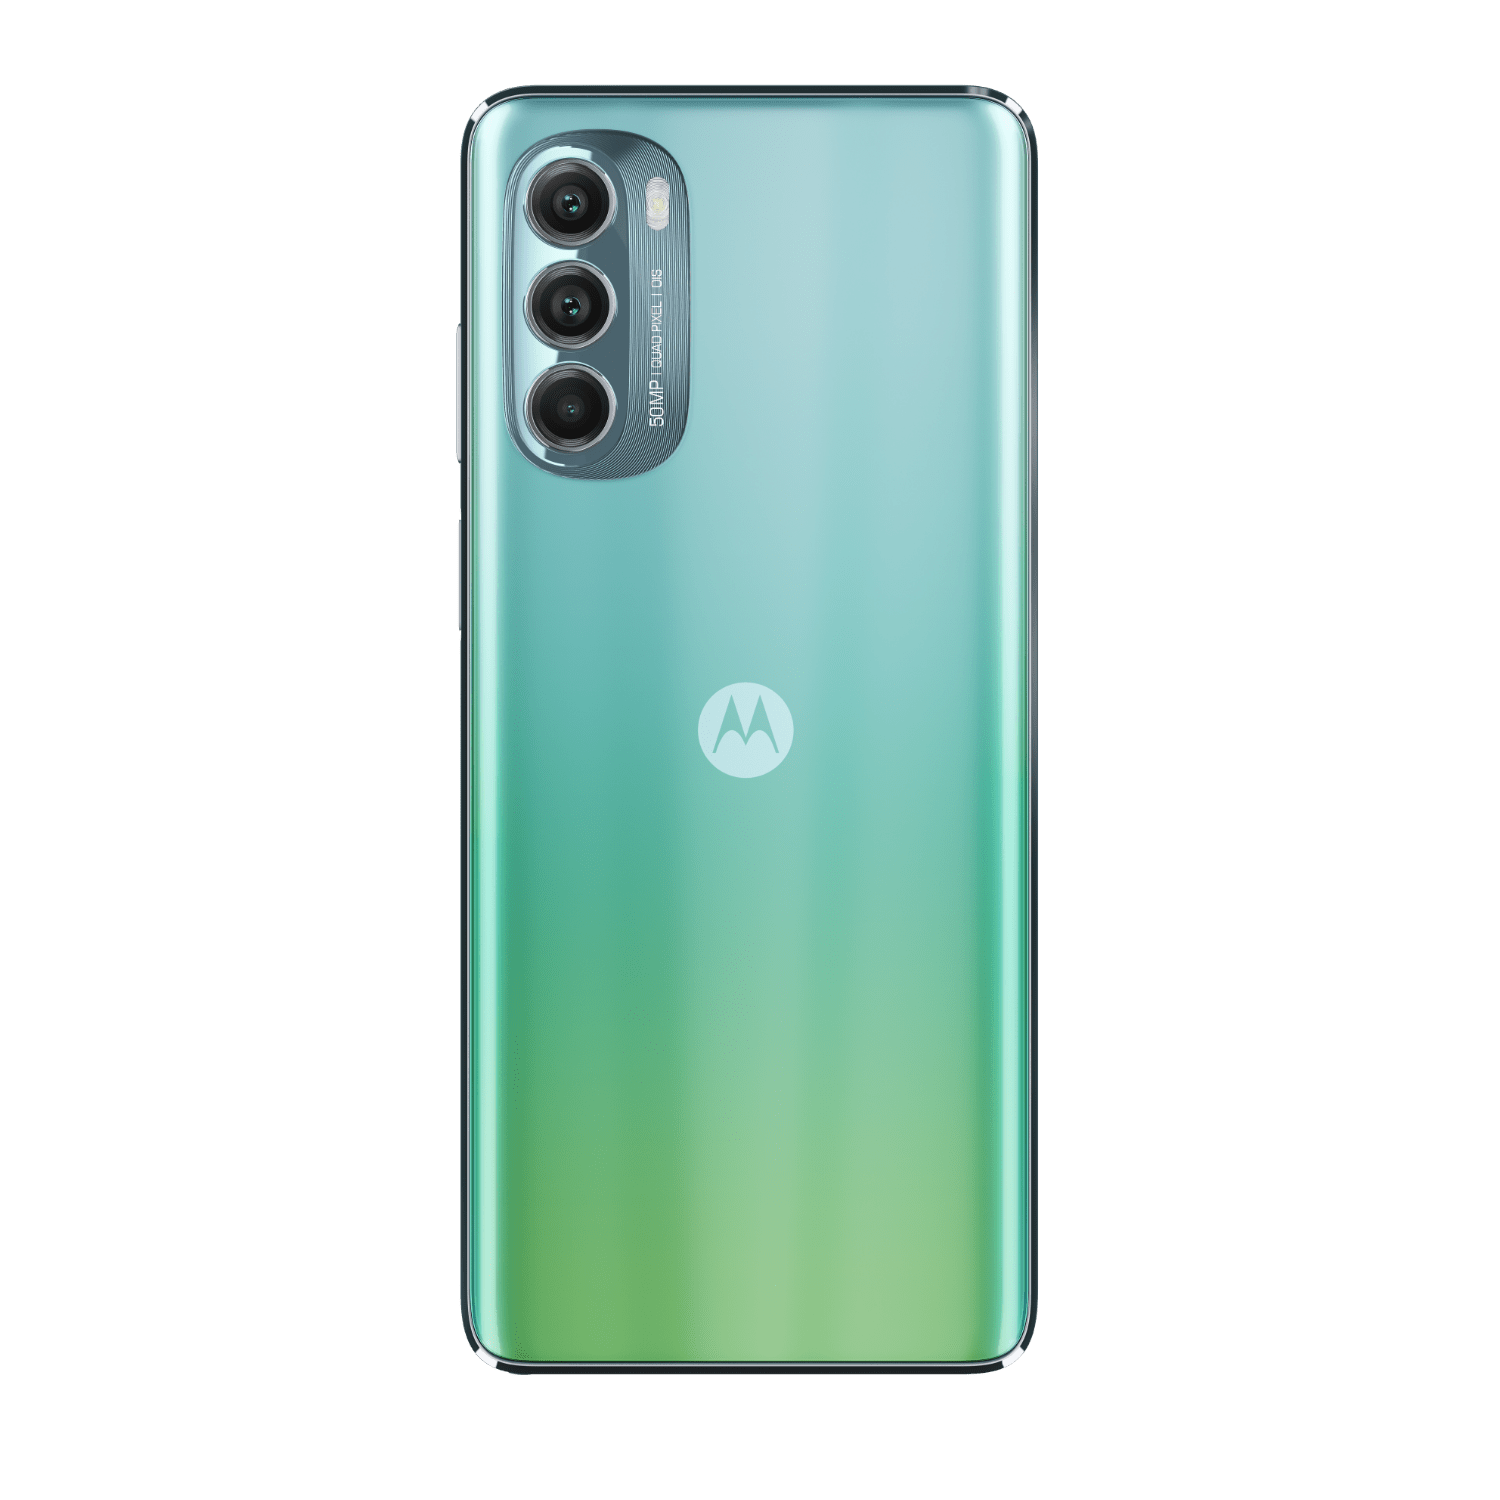 Best stylus Android phone – moto g stylus 5G | motorola US - Motorola